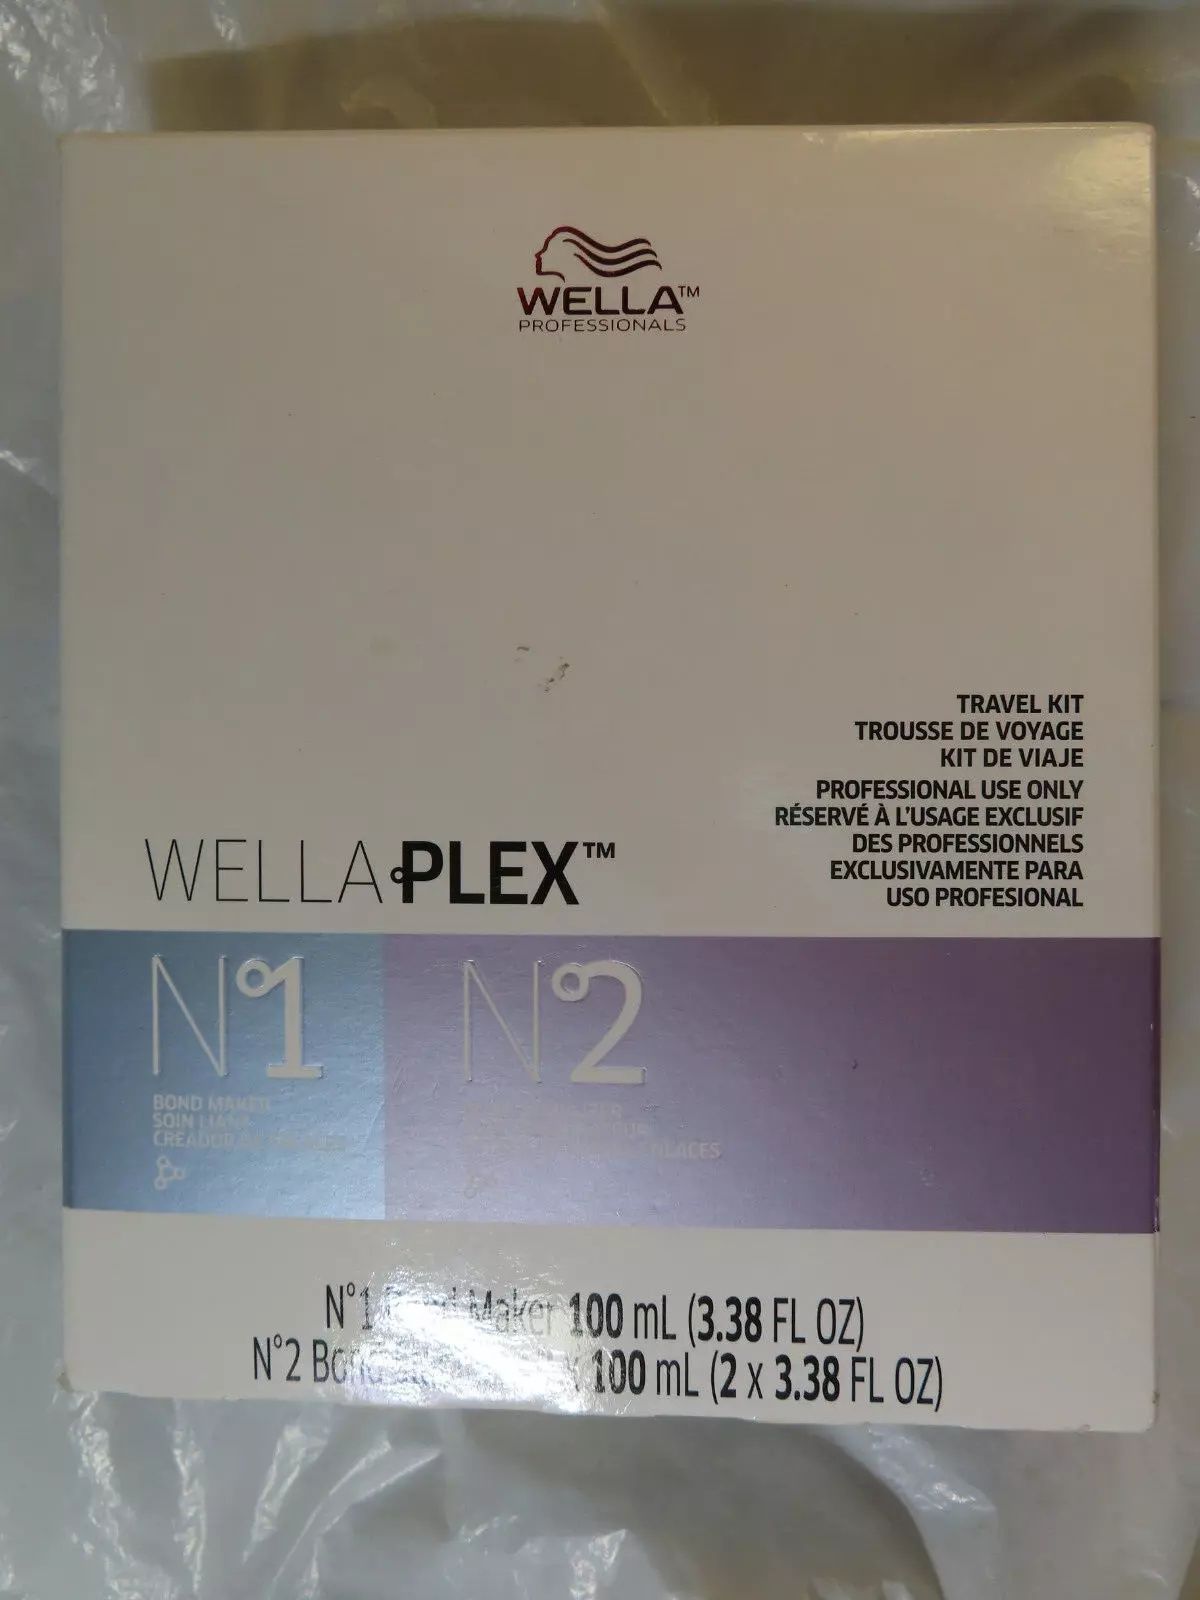 Wellaplex travel kit